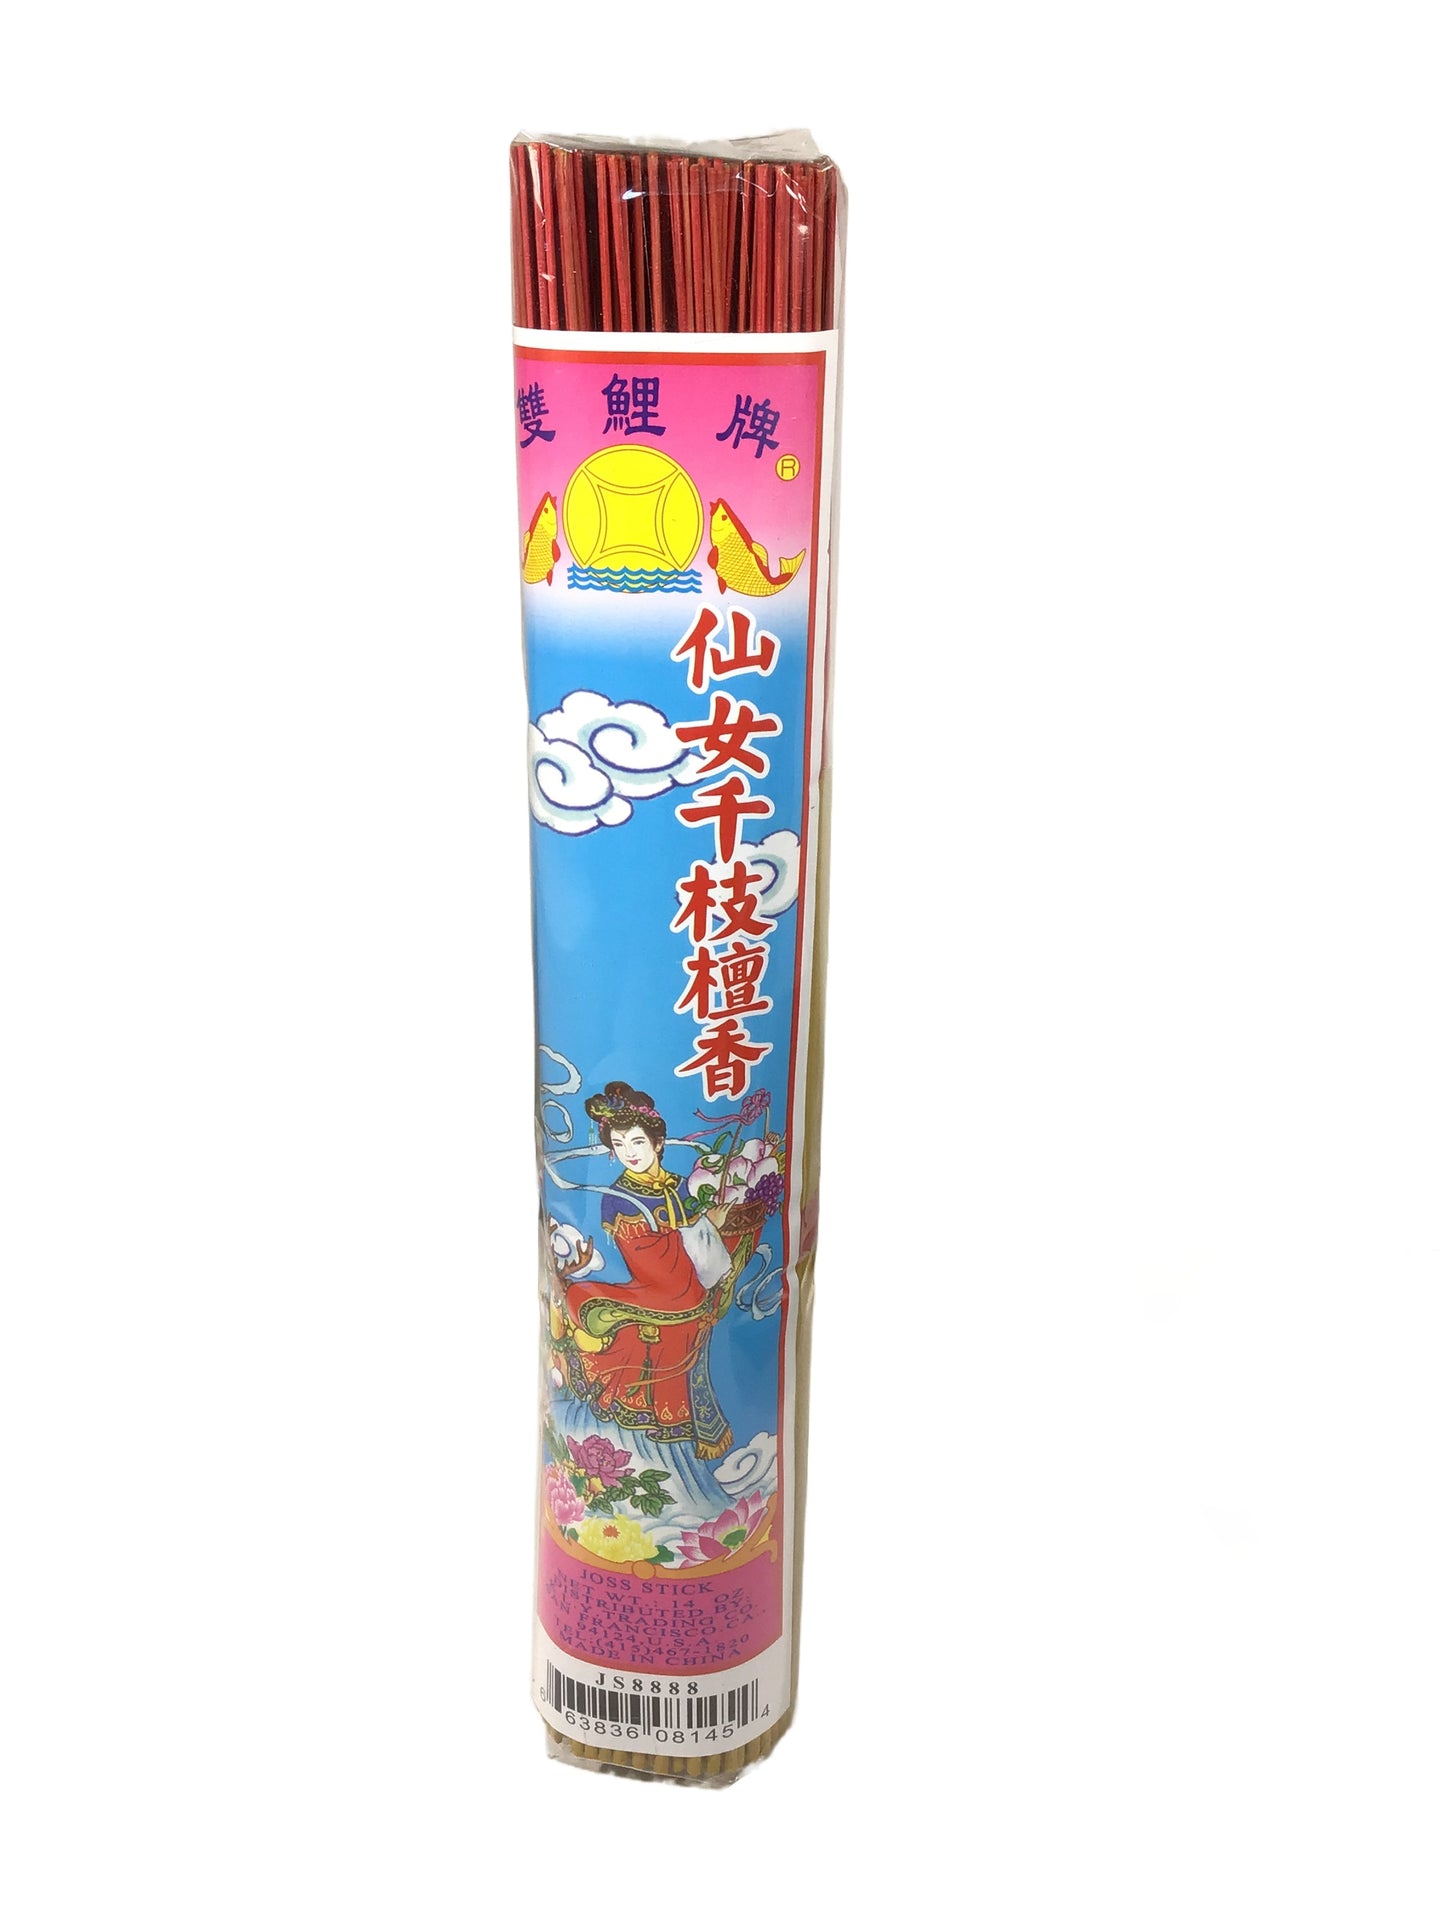 32.7cm Long Incense Sticks for the Goddess - About 400 Sticks 雙鯉牌 仙女千枝檀香